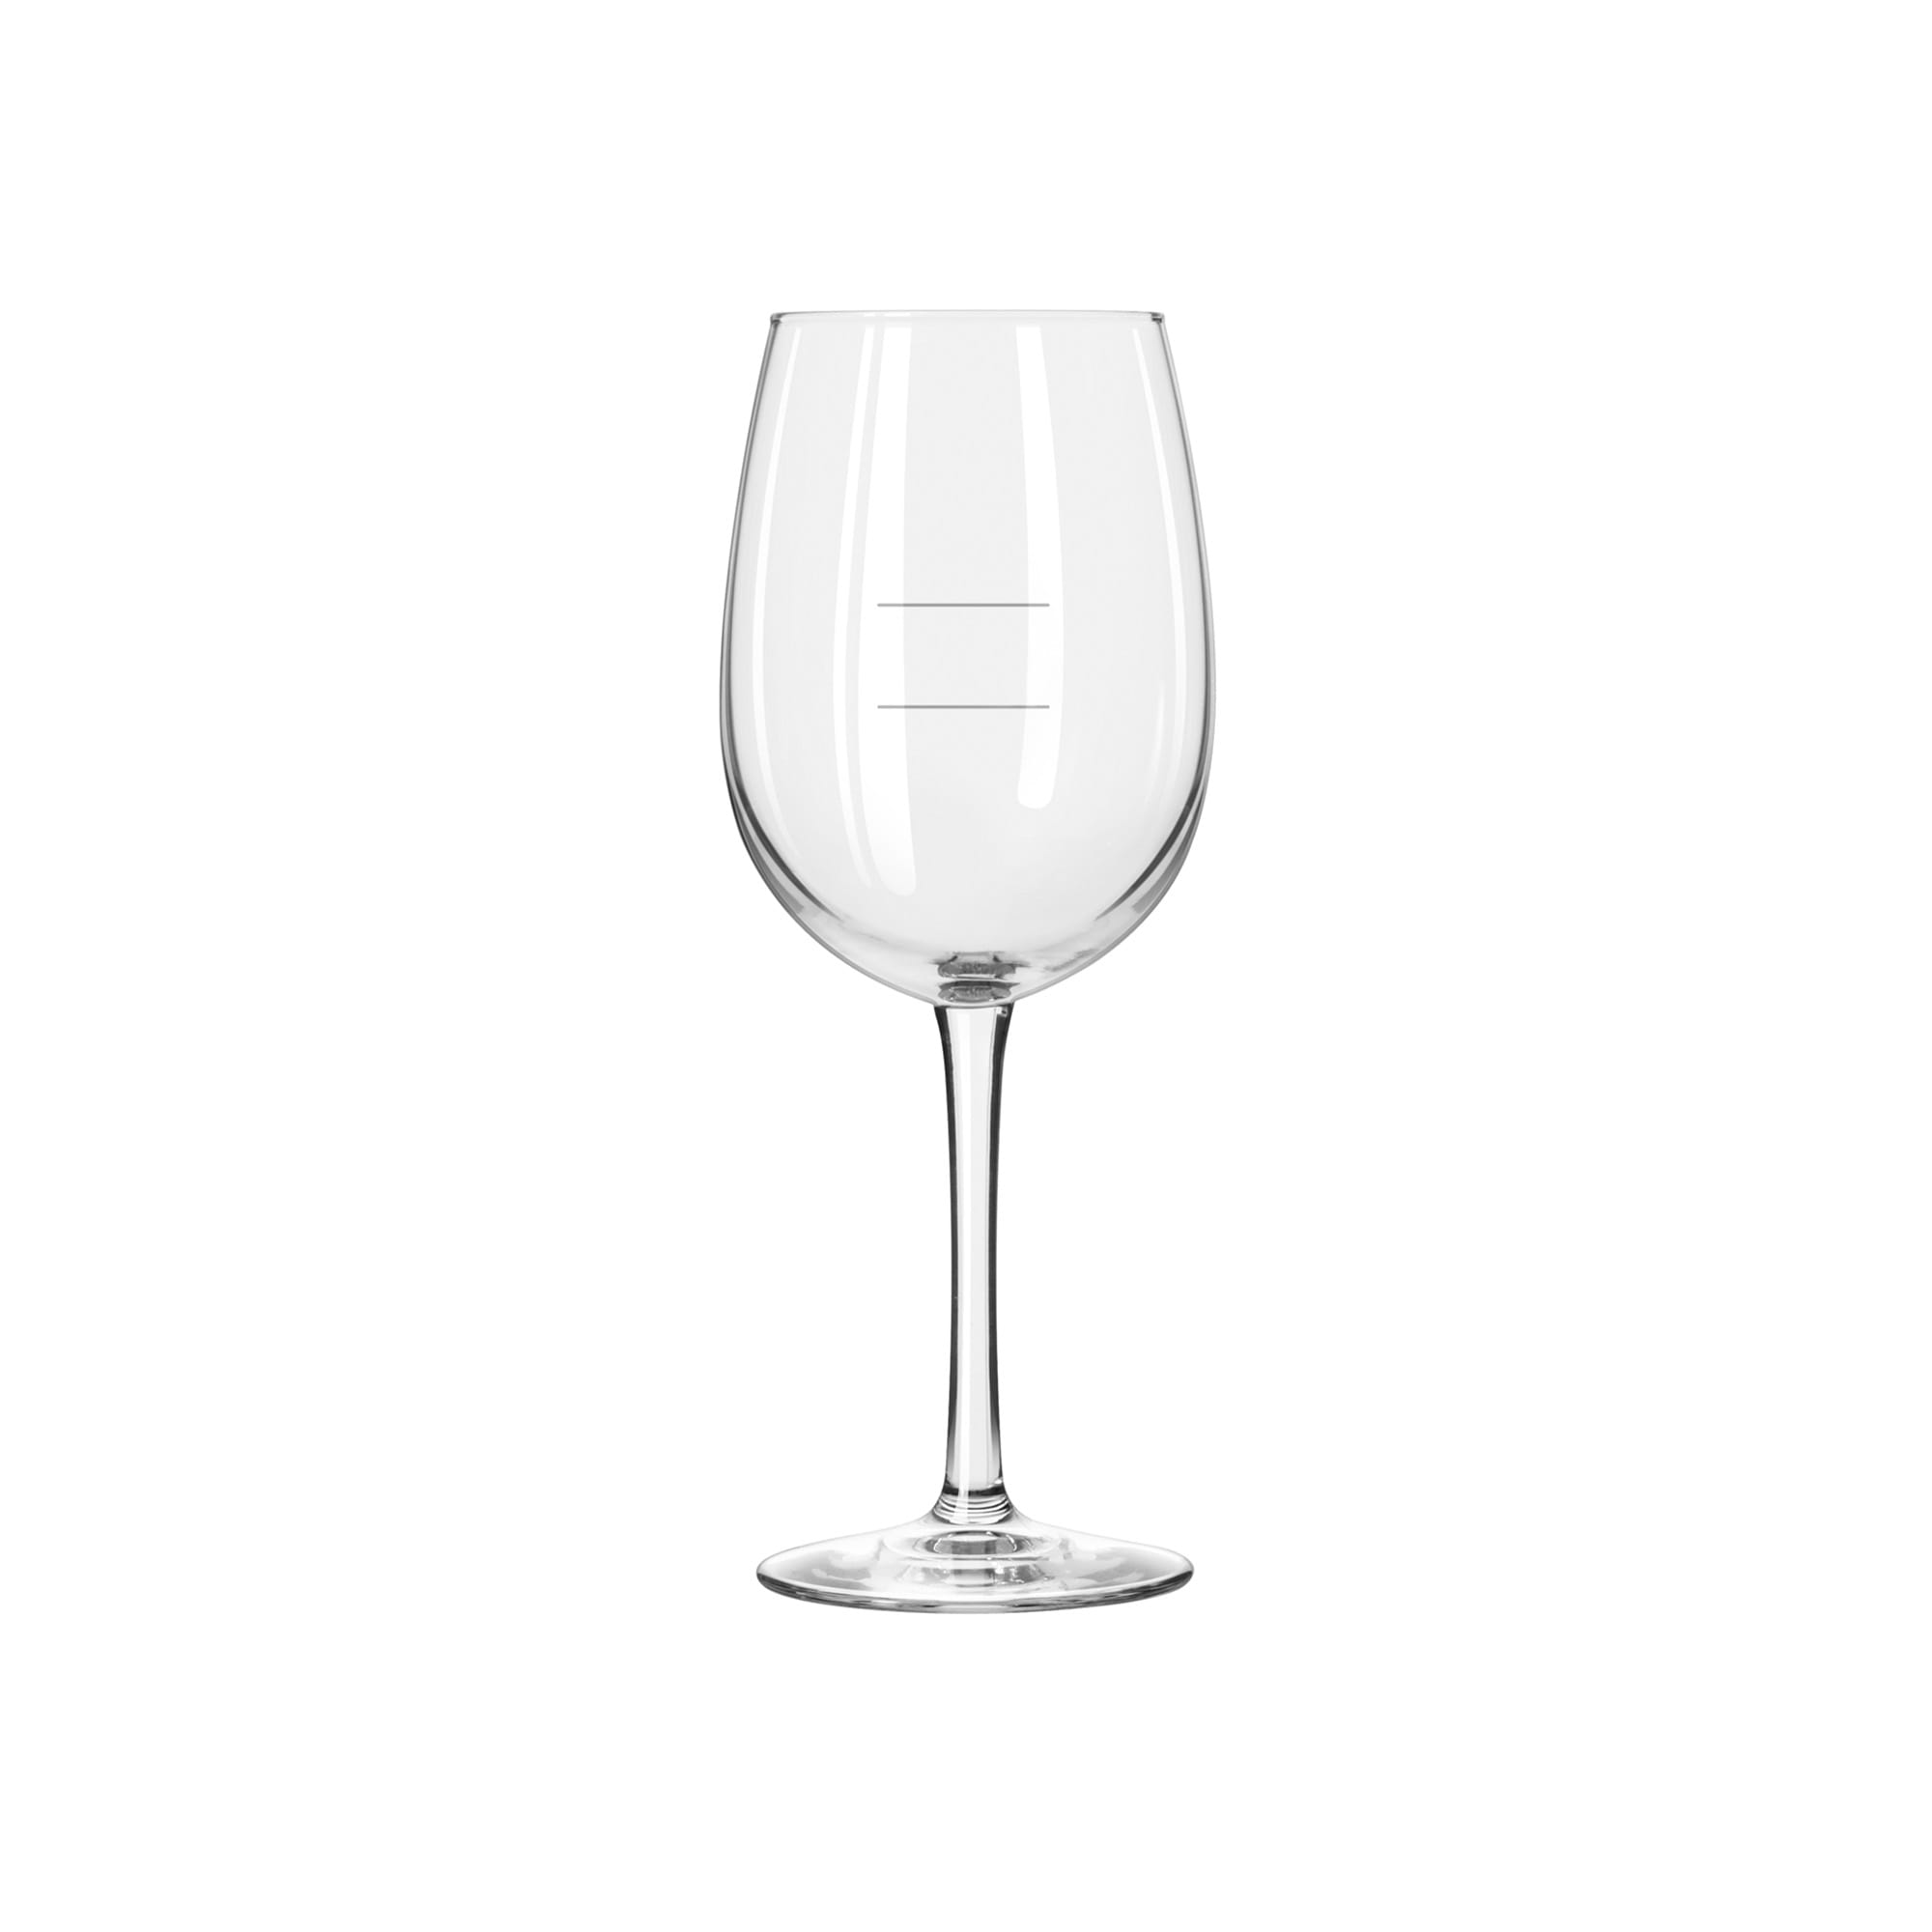 Libbey 7510 16 oz Vina Tall Wine Glass - Safedge Rim & Foot Guarantee